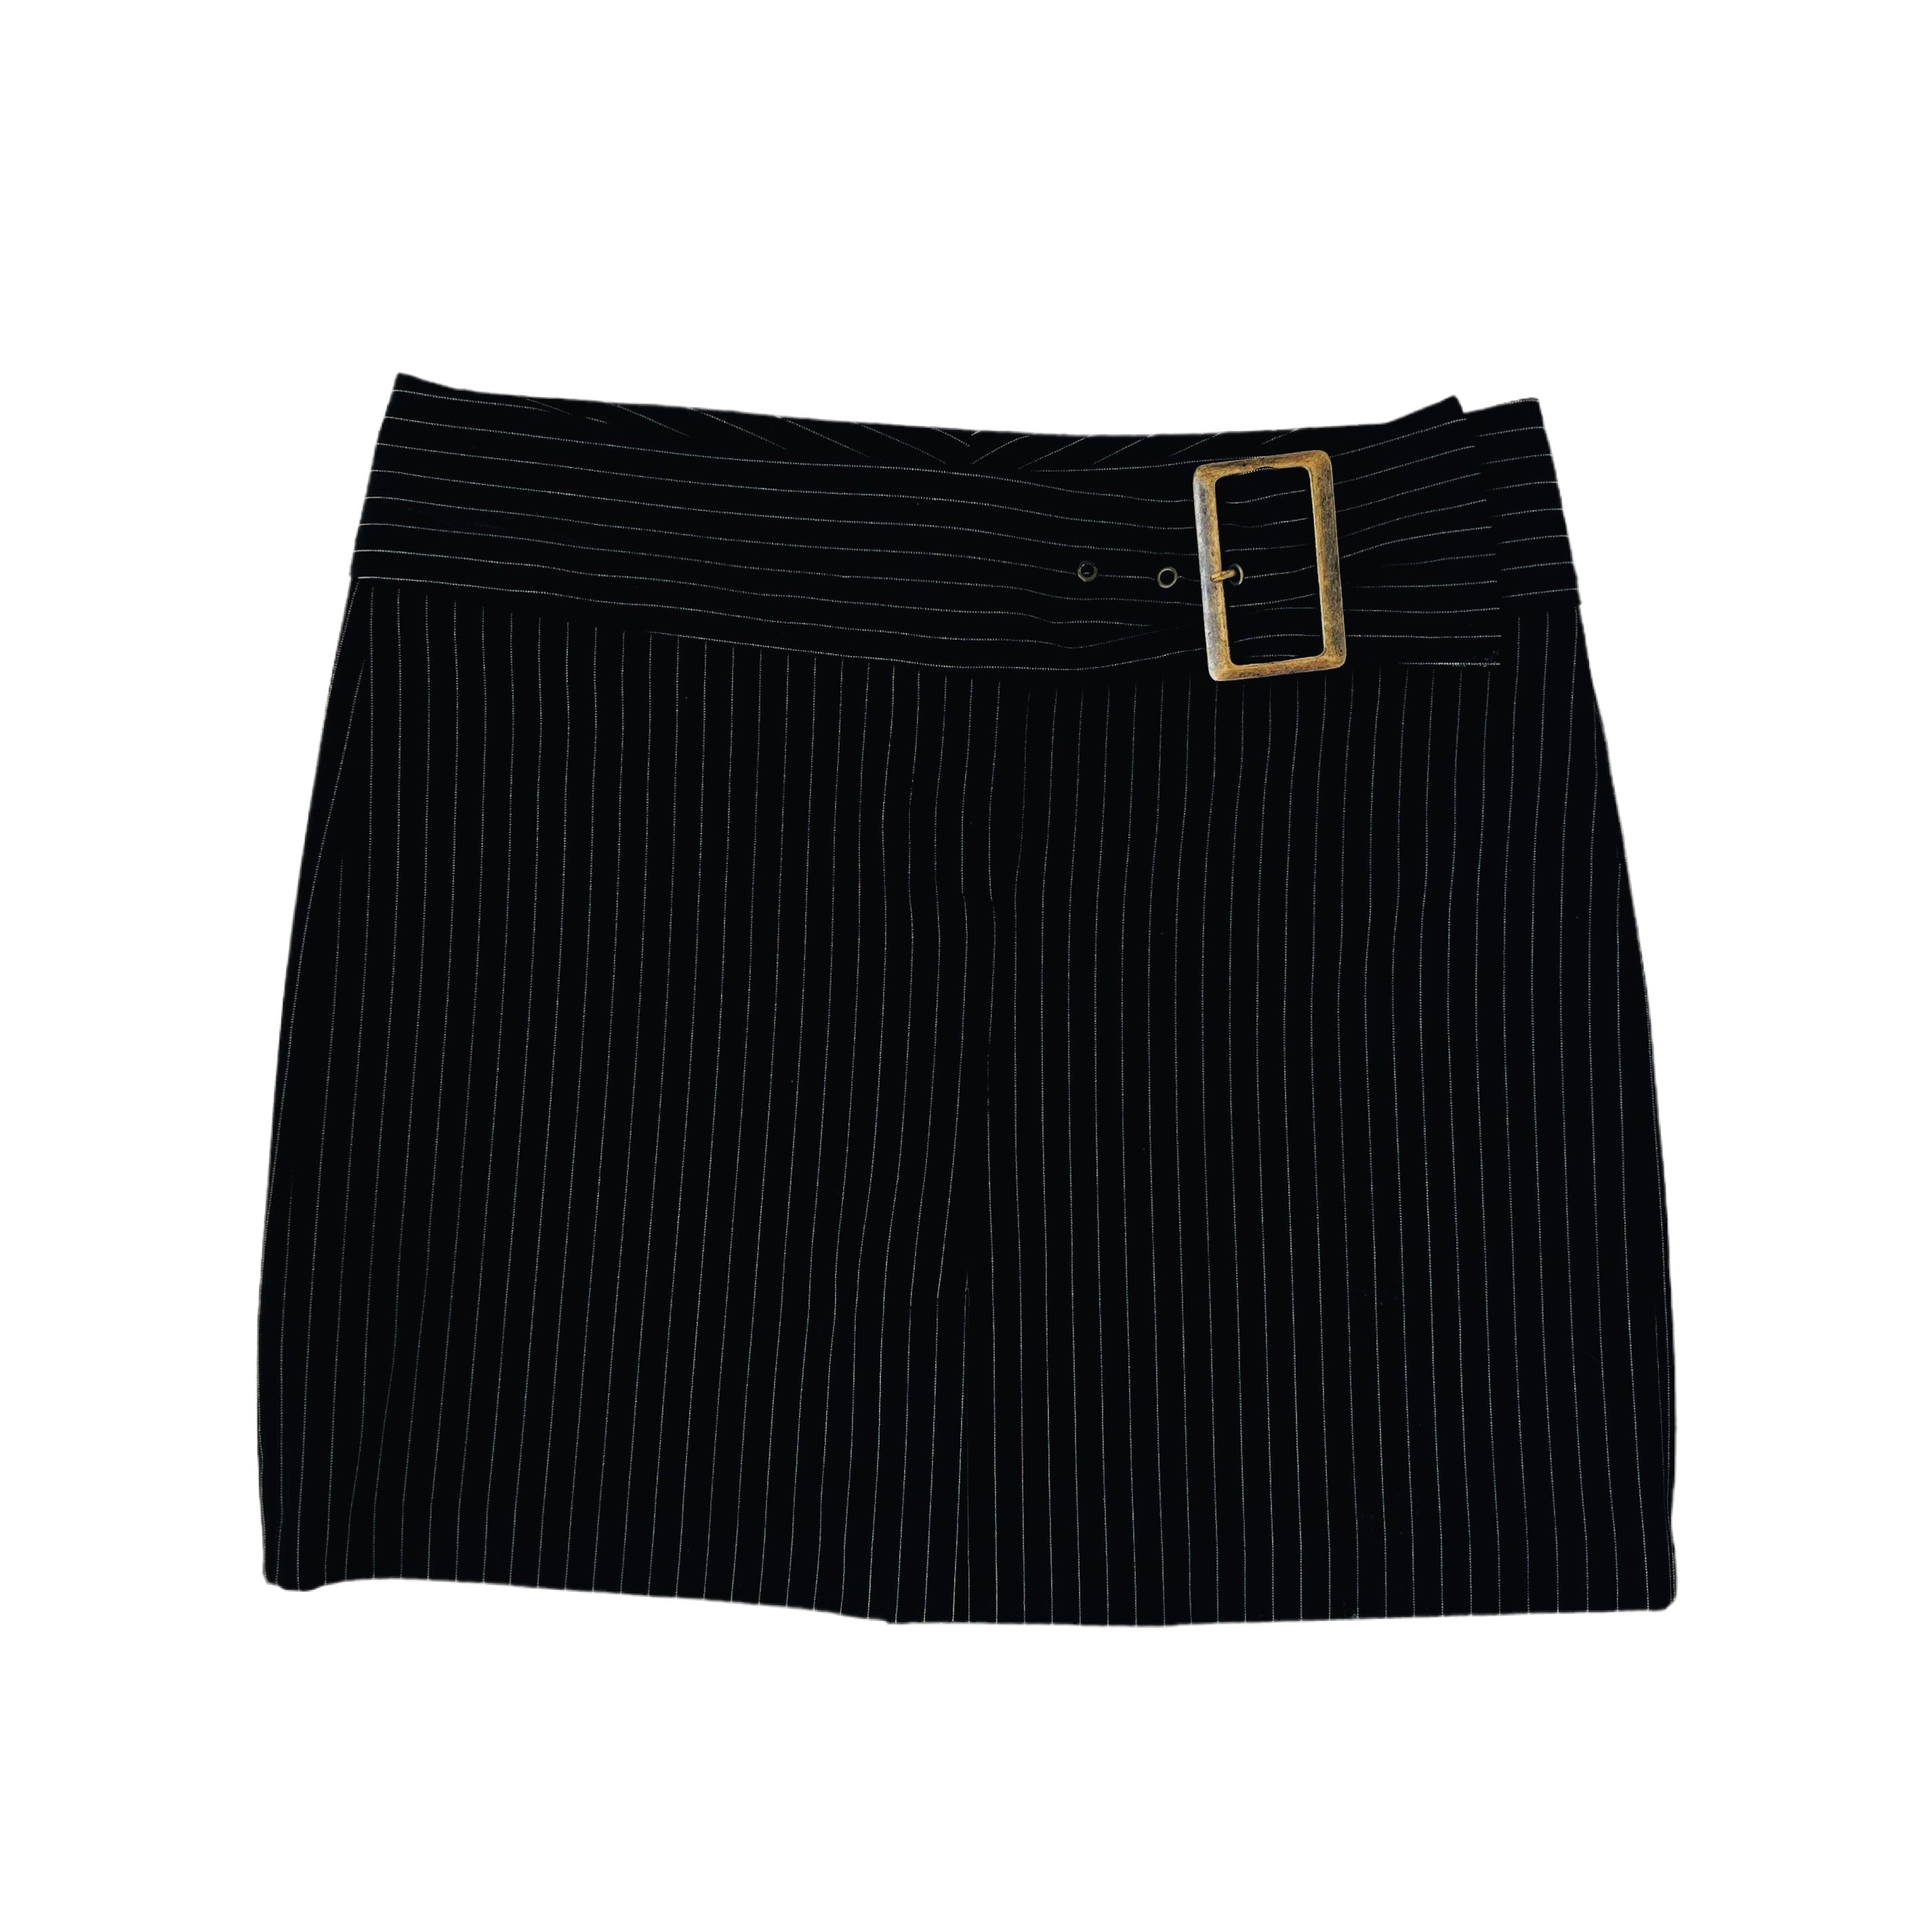 Black Pinstriped Mini Skirt (S)